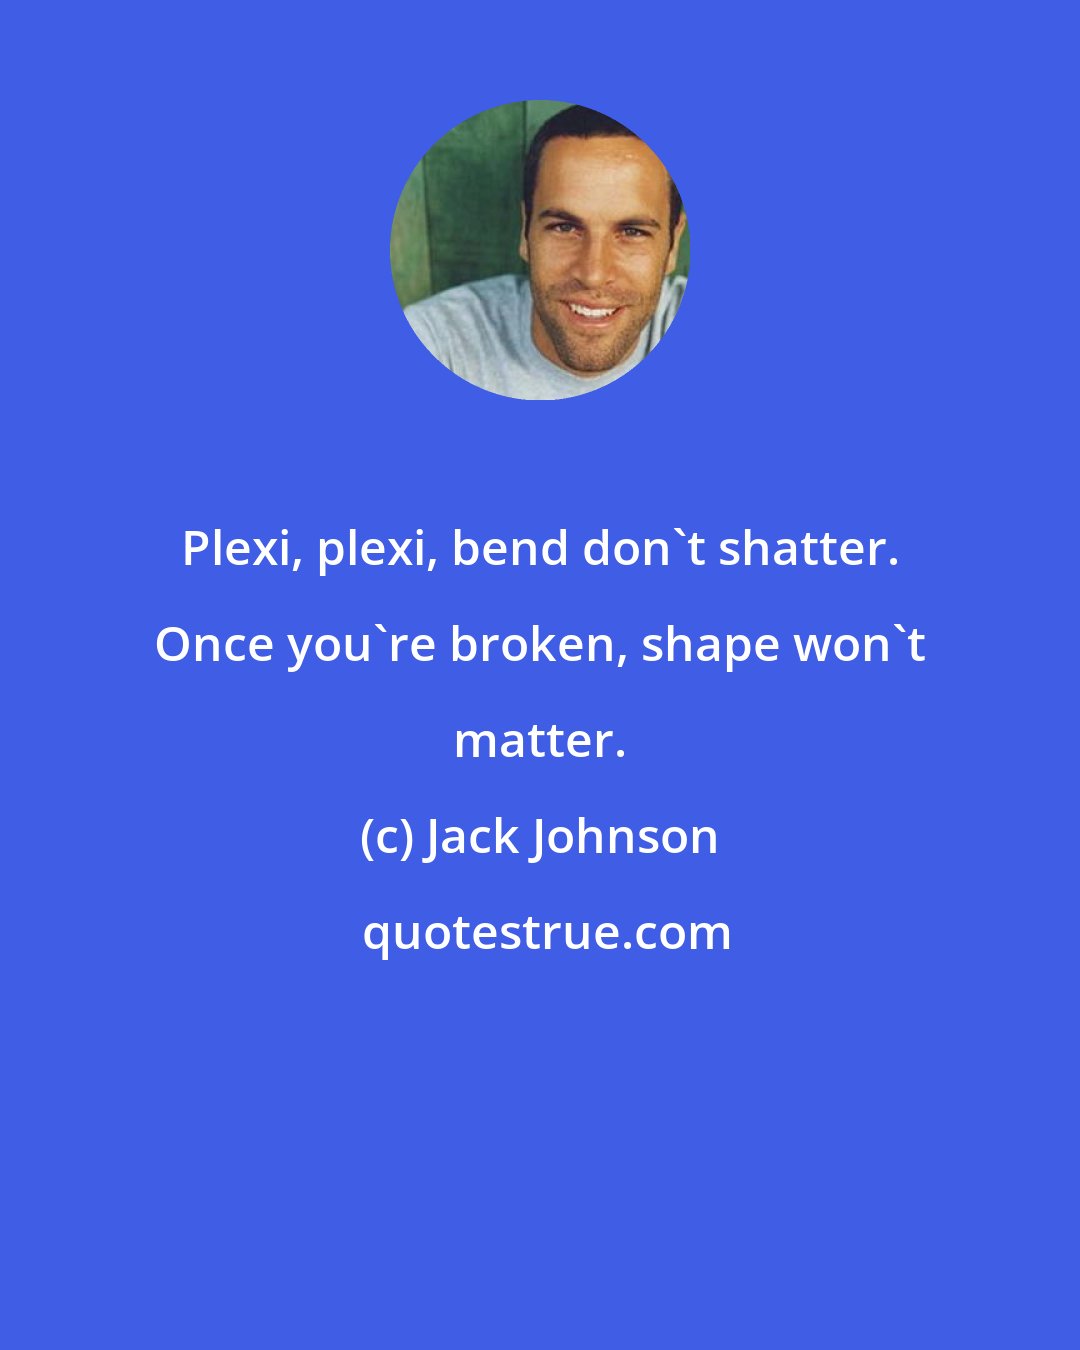 Jack Johnson: Plexi, plexi, bend don't shatter. Once you're broken, shape won't matter.